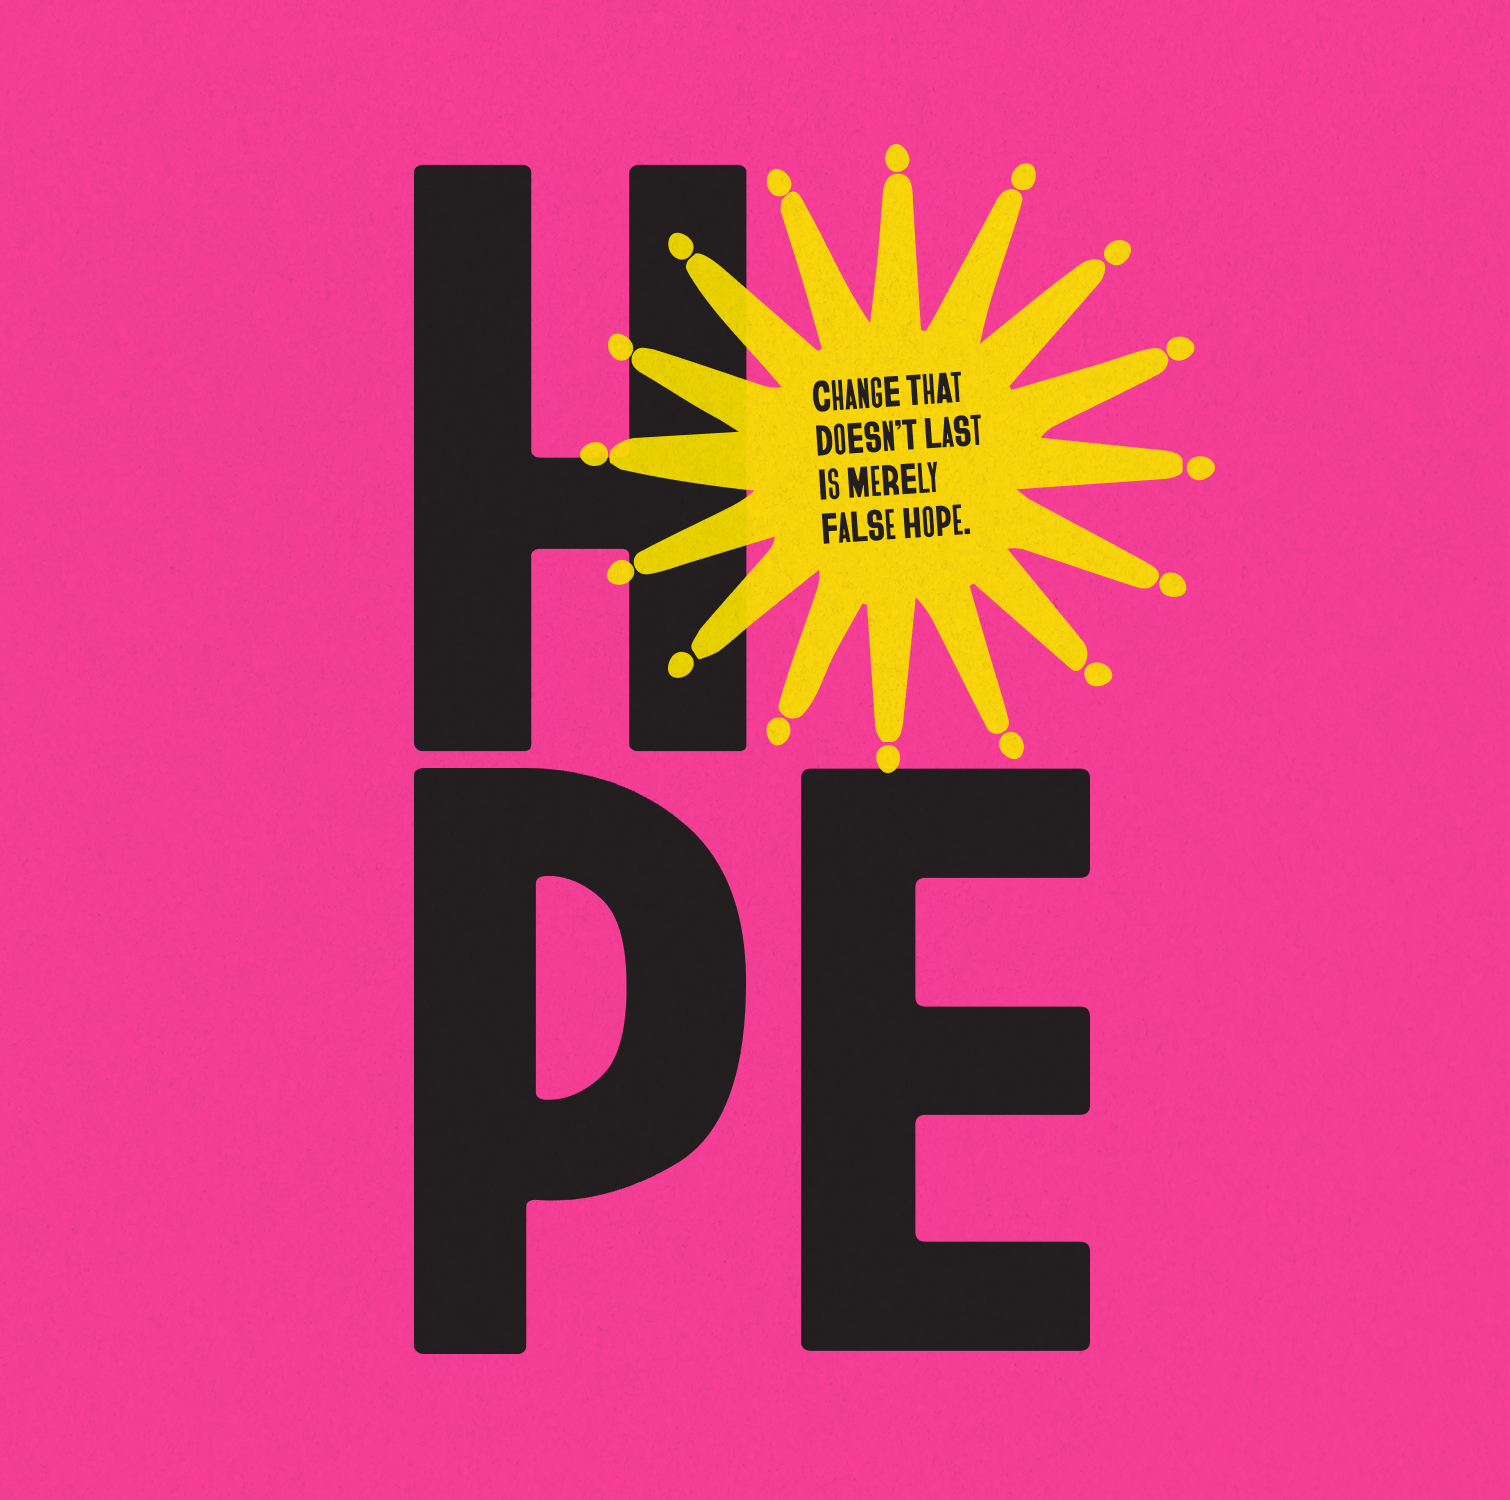 Hope-1